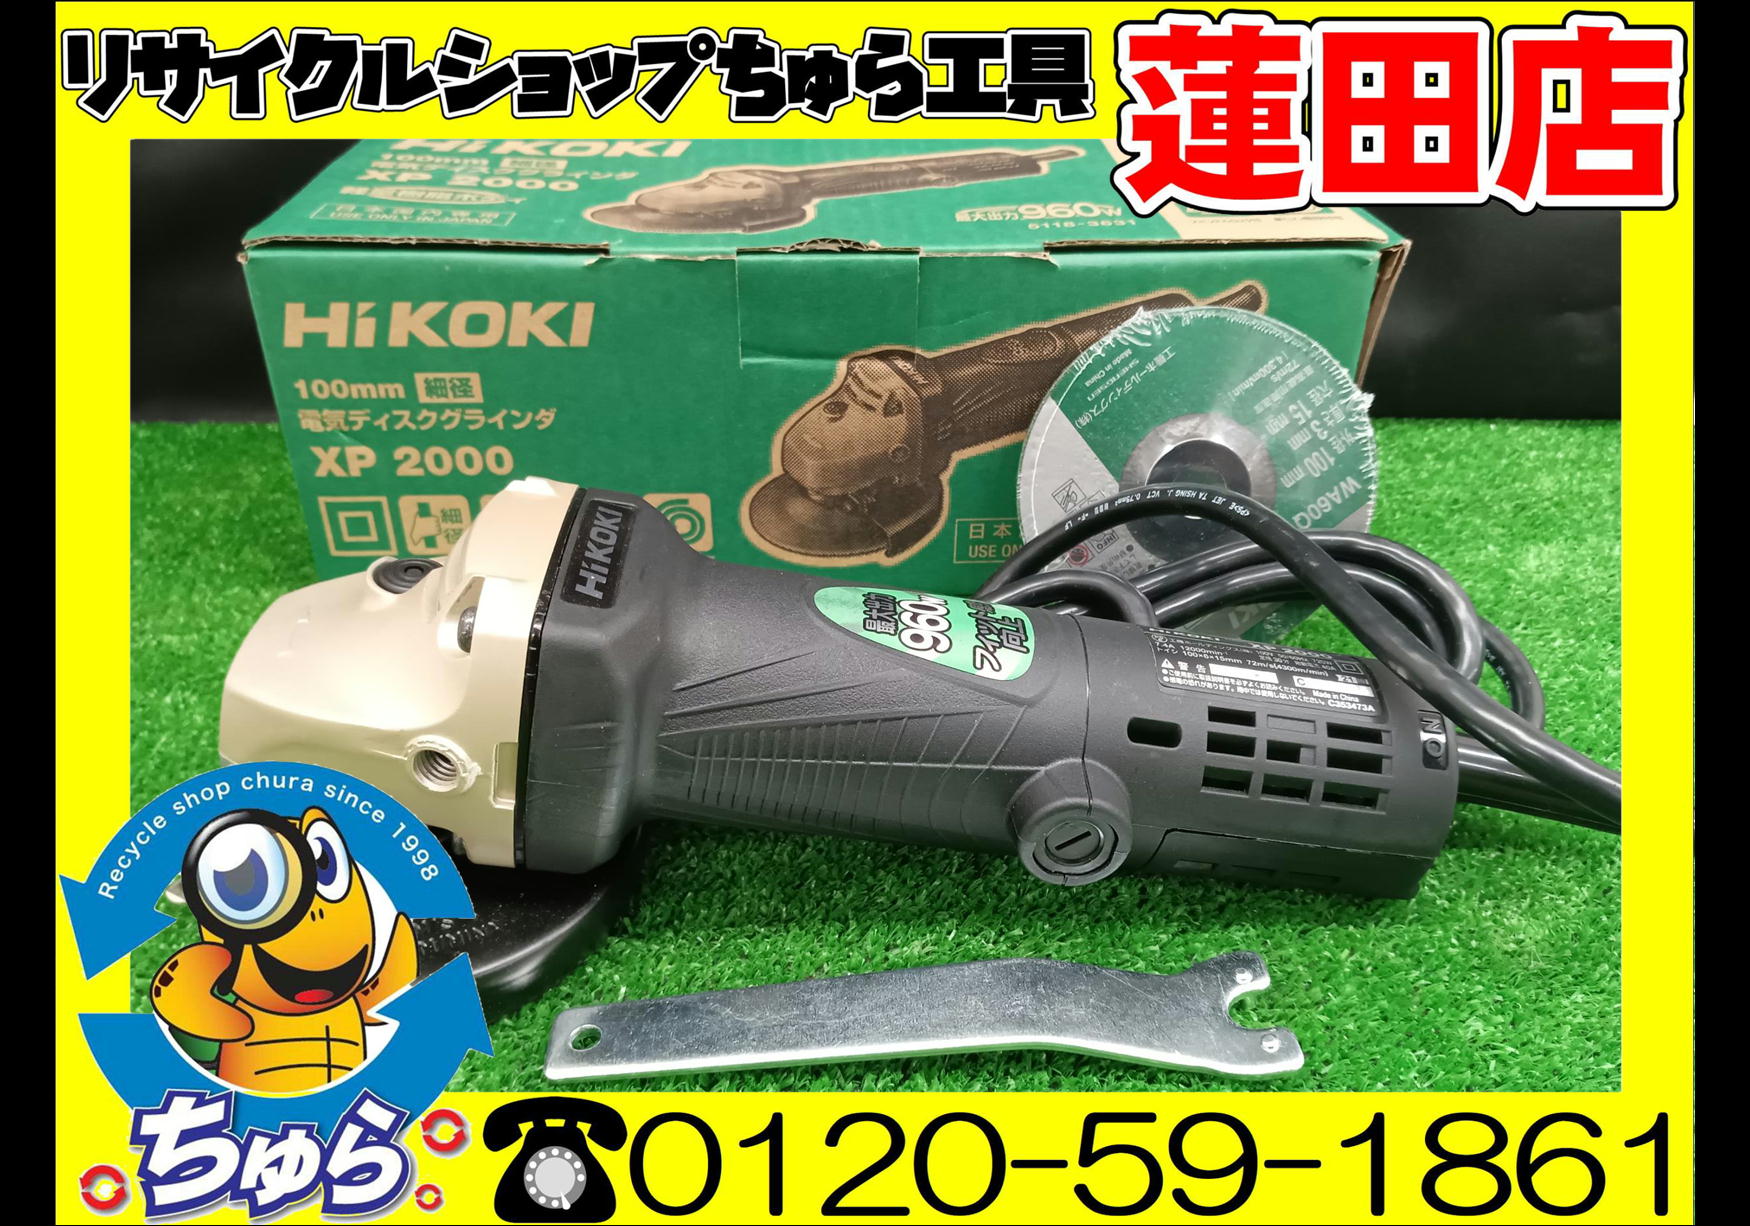 HiKOKI XP2000 電気ディスクグラインダー - 自転車